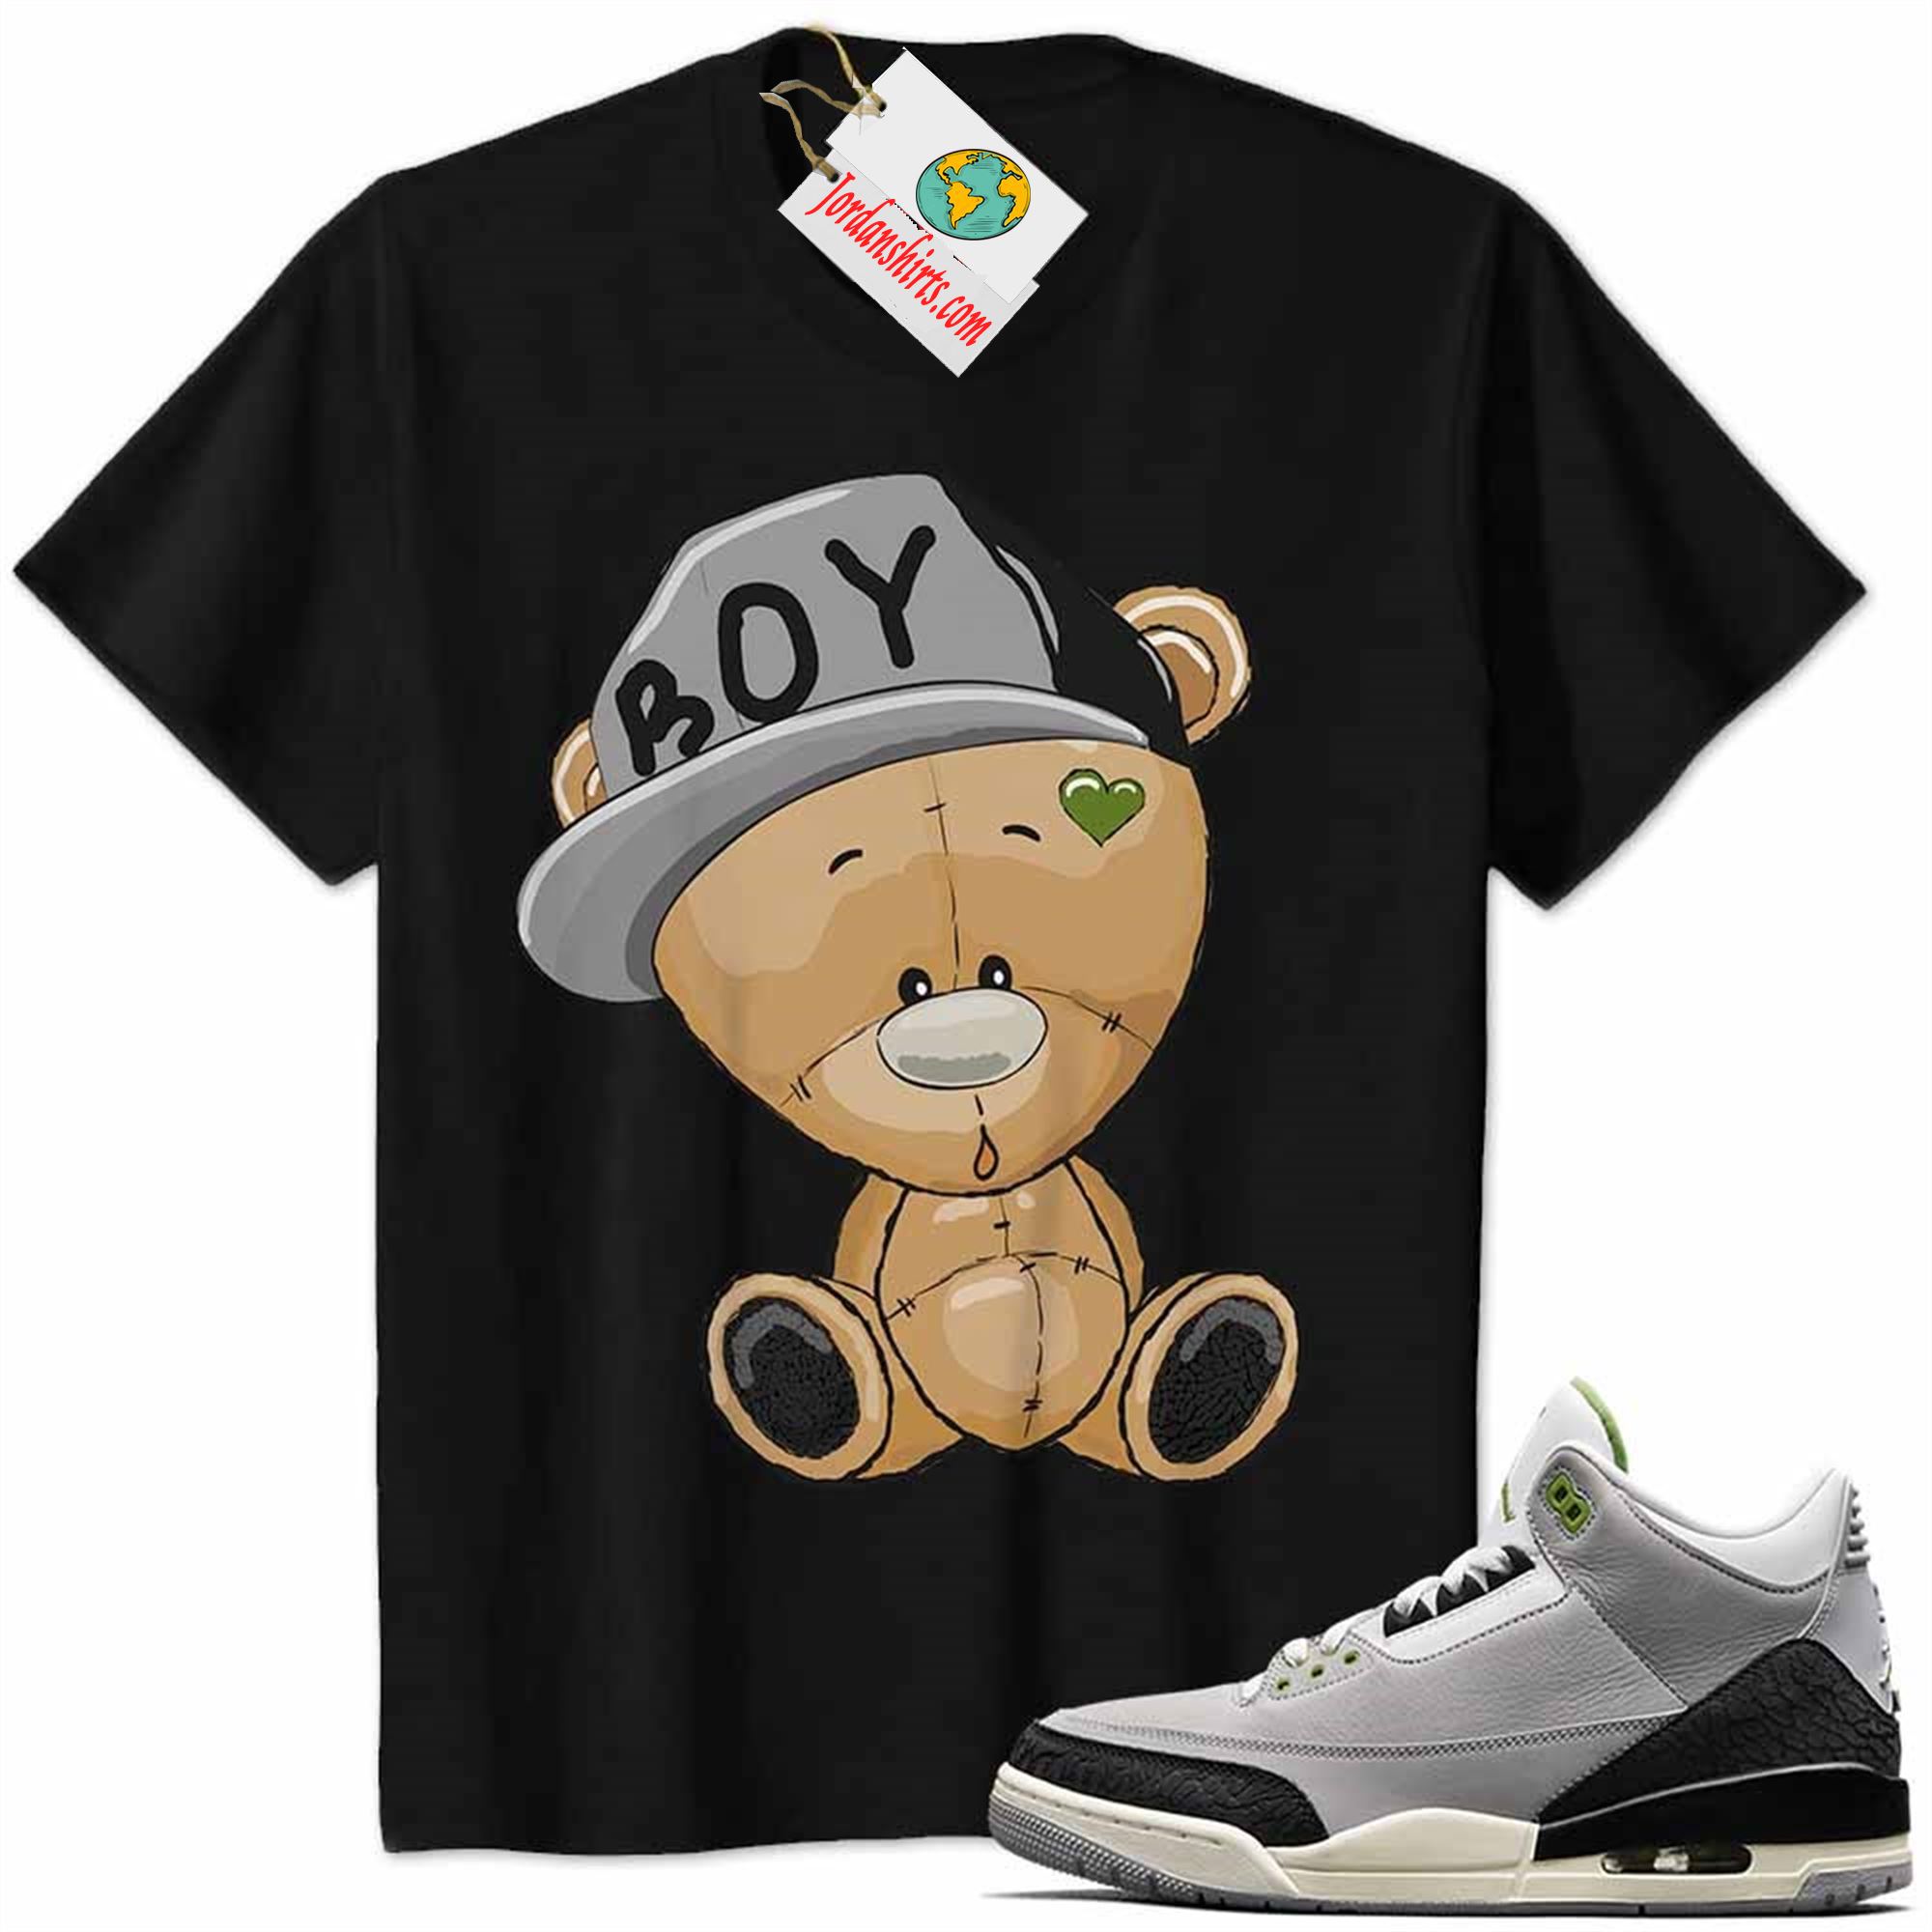 Jordan 3 Shirt, Jordan 3 Chlorophyll Shirt Cute Baby Teddy Bear Black Plus Size Up To 5xl